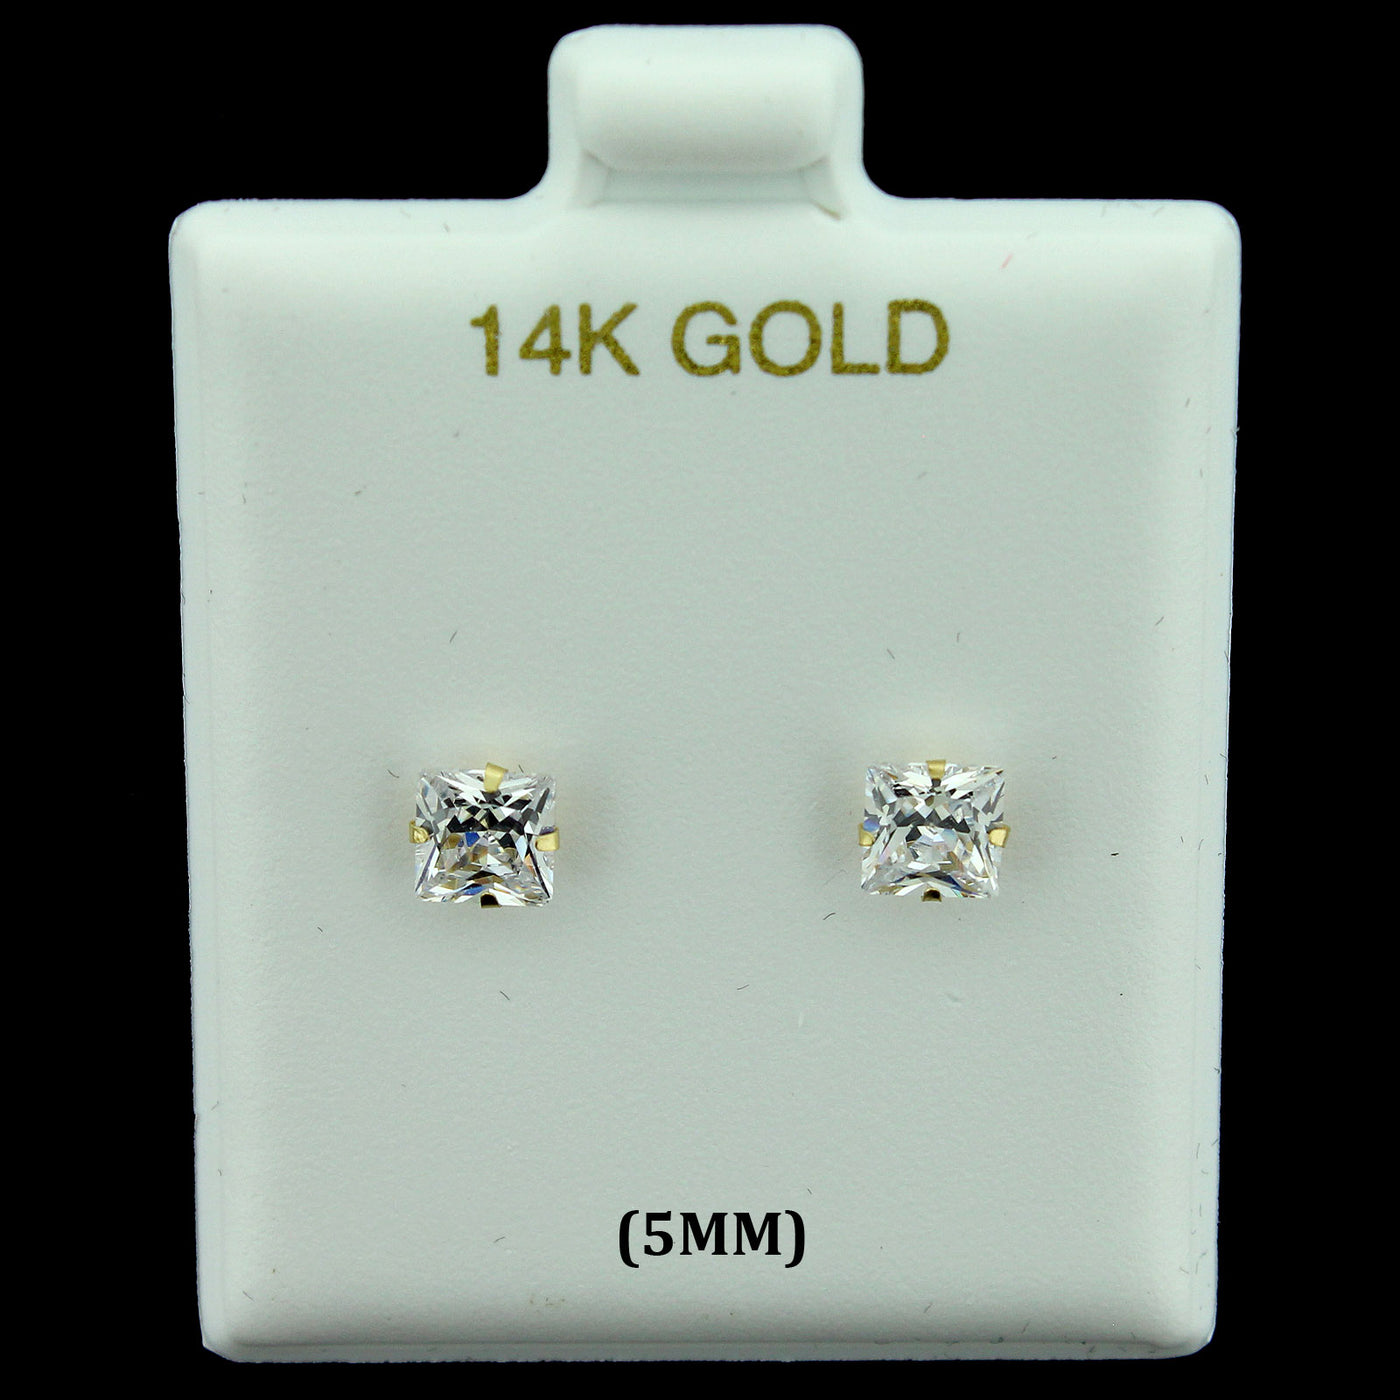 14K Real Solid Gold 5MM Princess Cut Square CZ Stud Earrings, Men Women